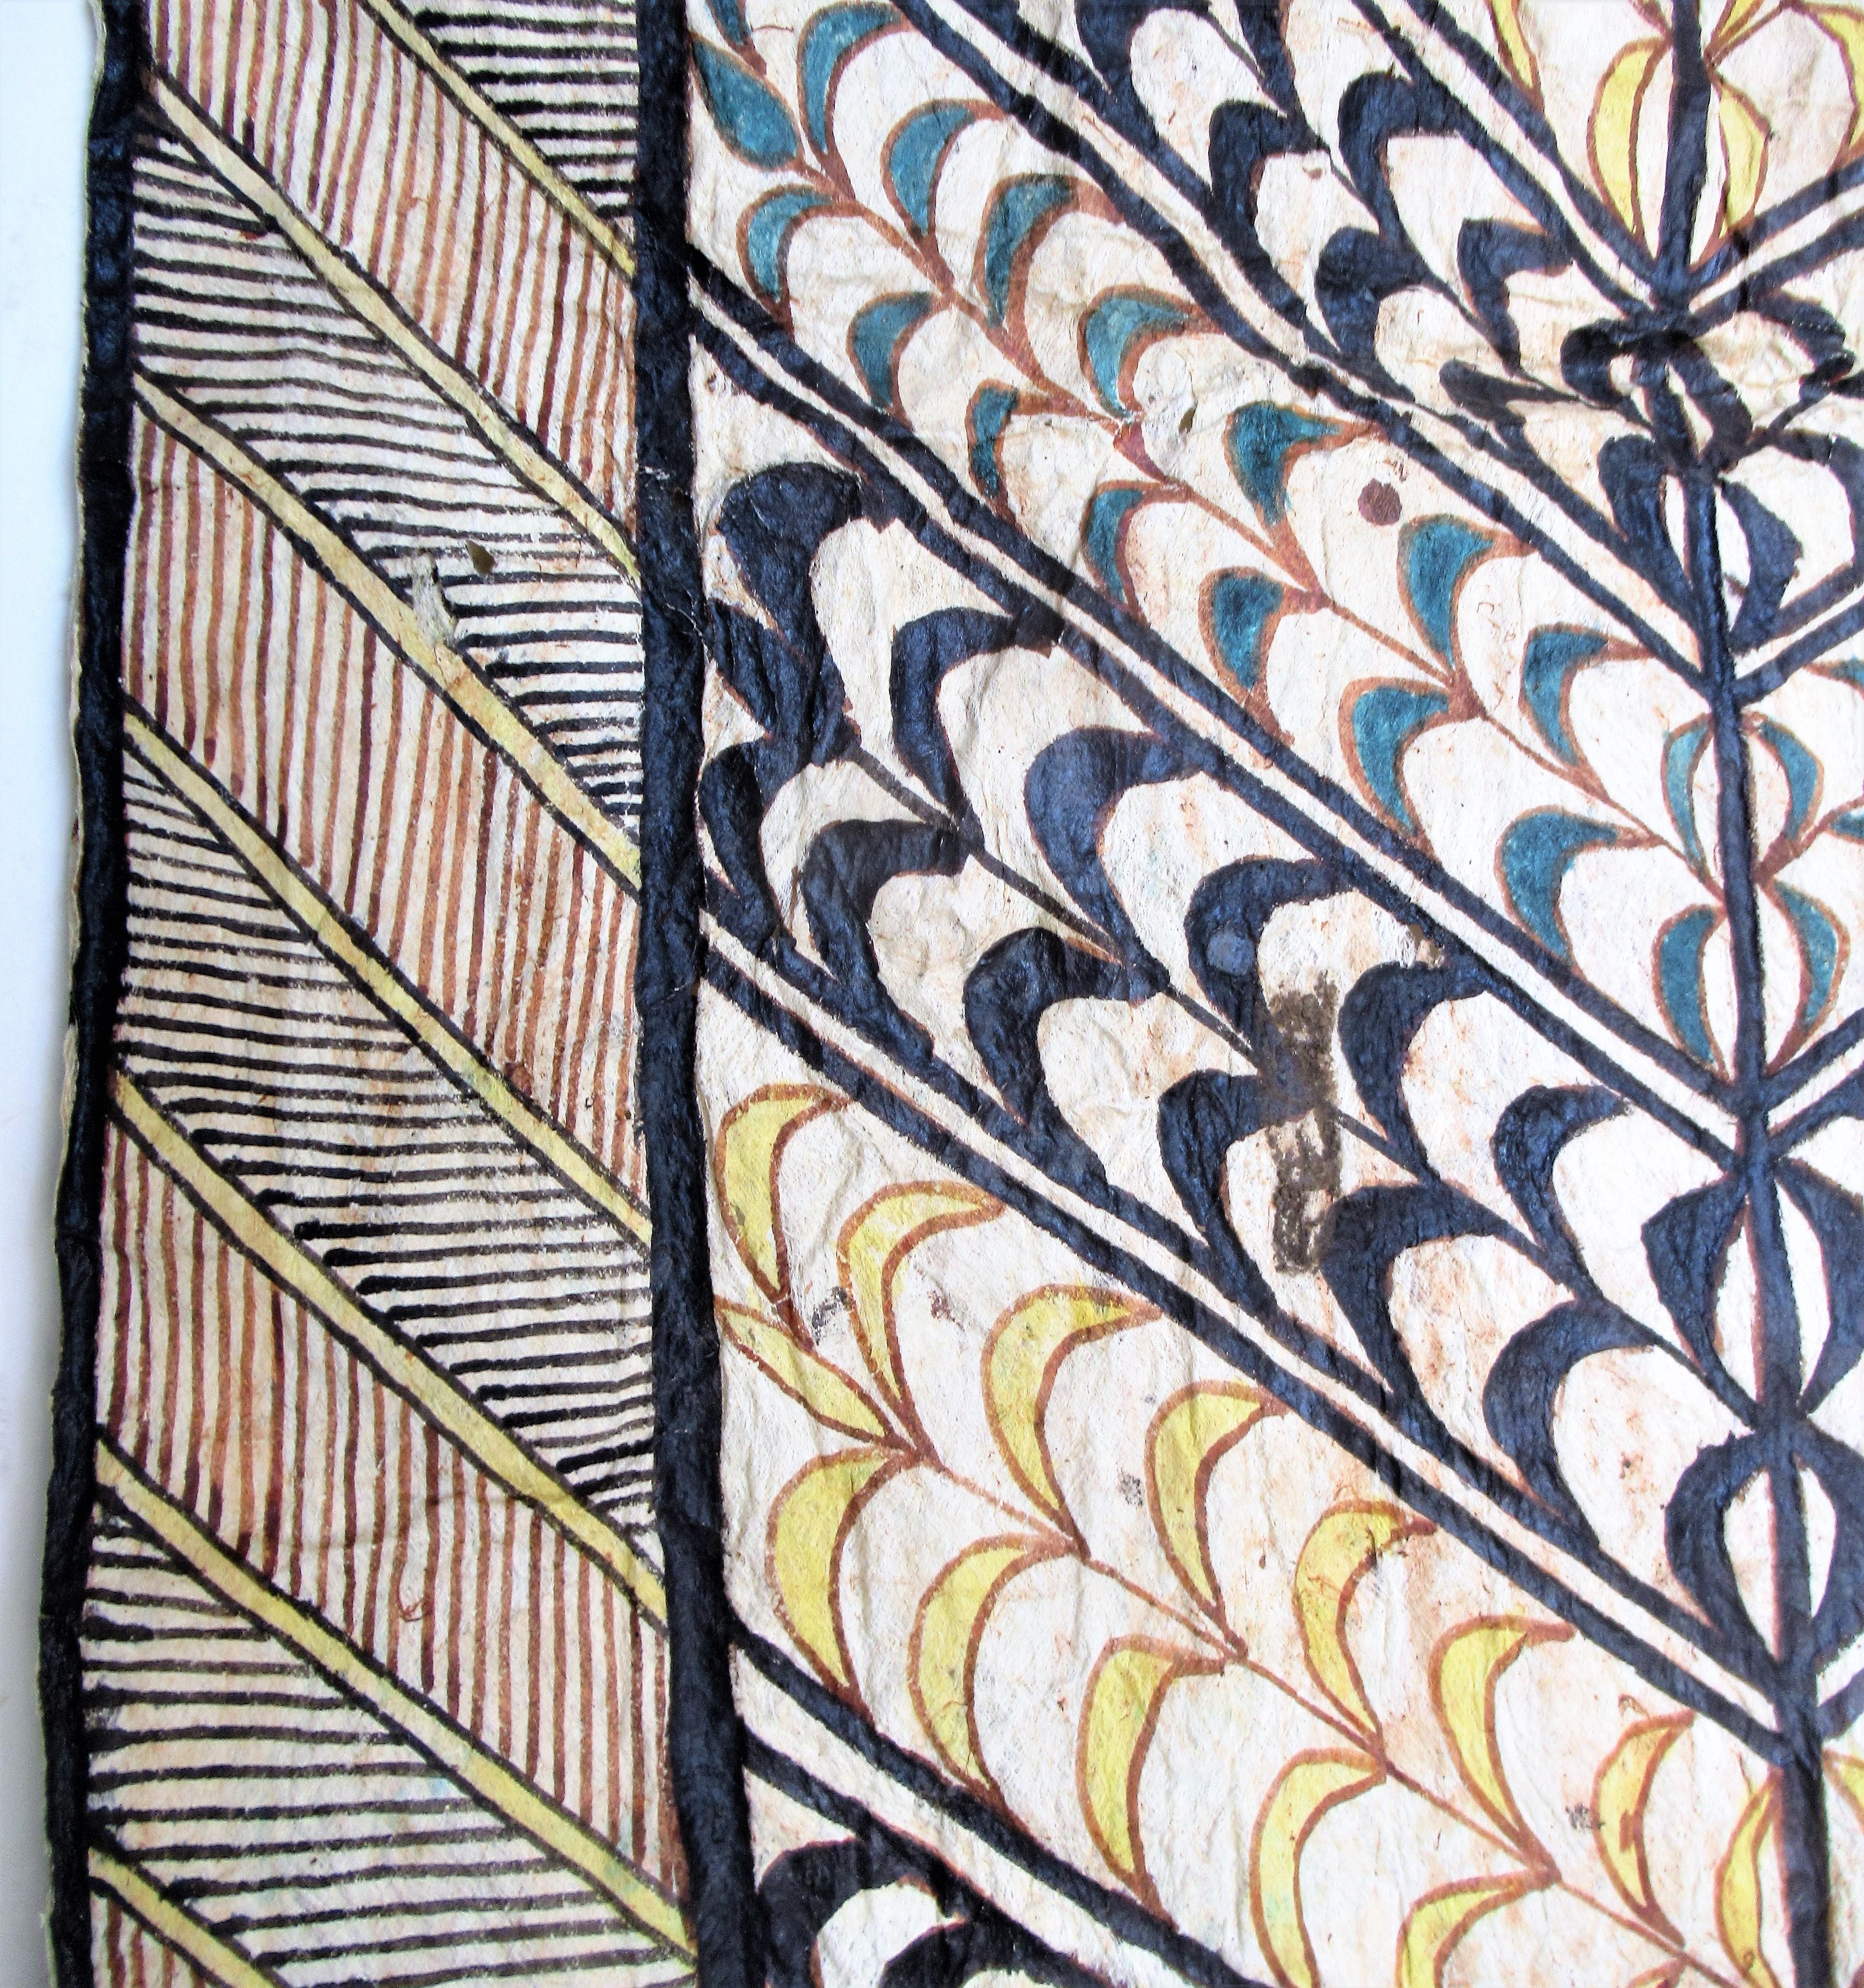 South American Antique 19th Century Tapa Cloth